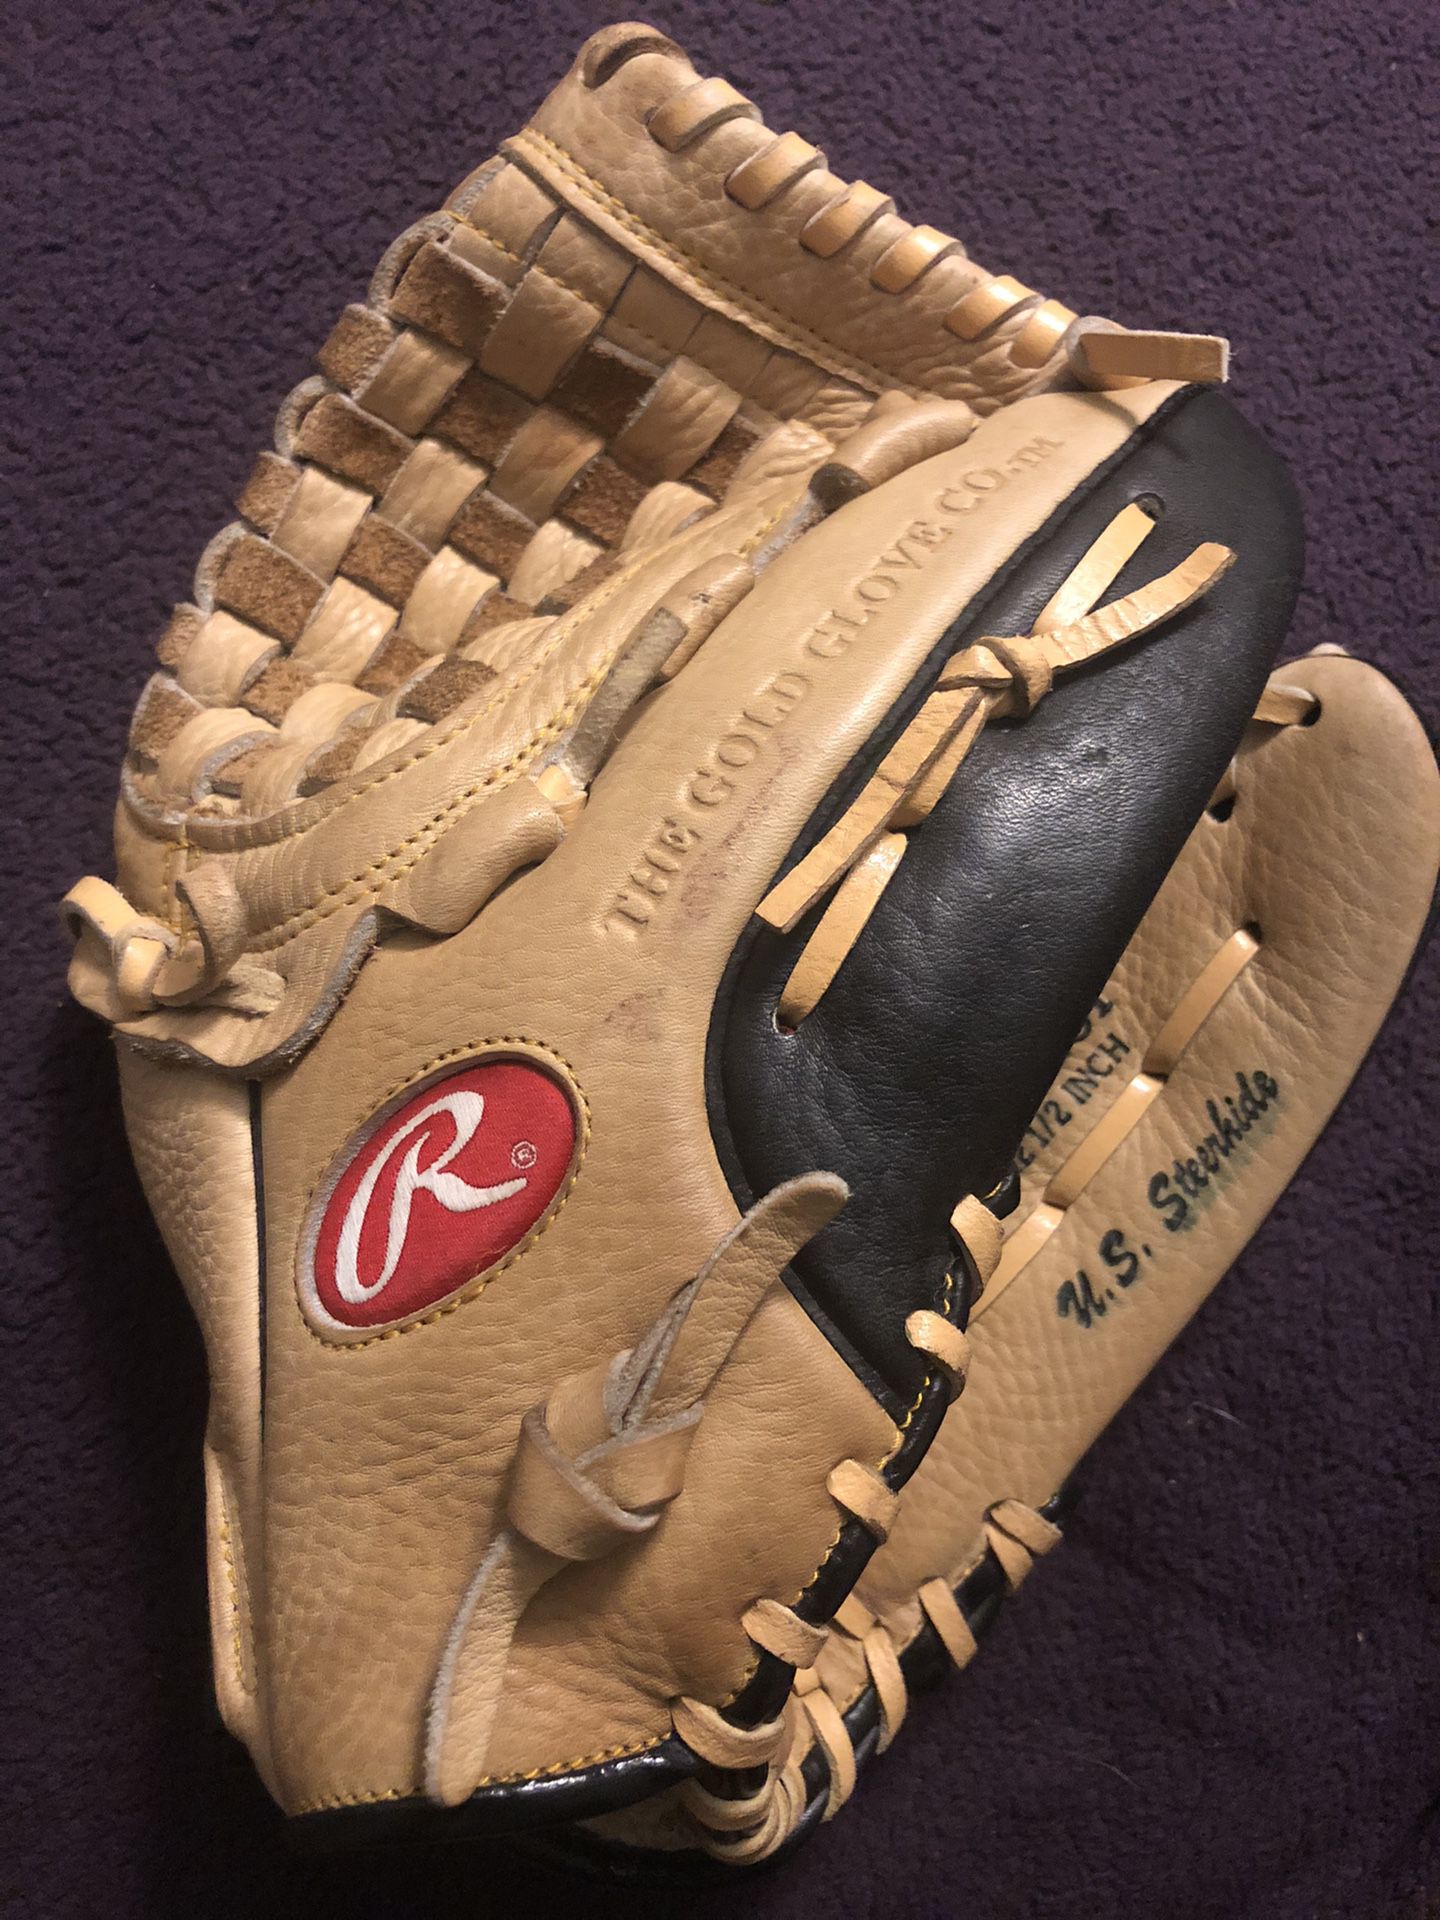 Rawlings Longhorn Series Baseball Glove